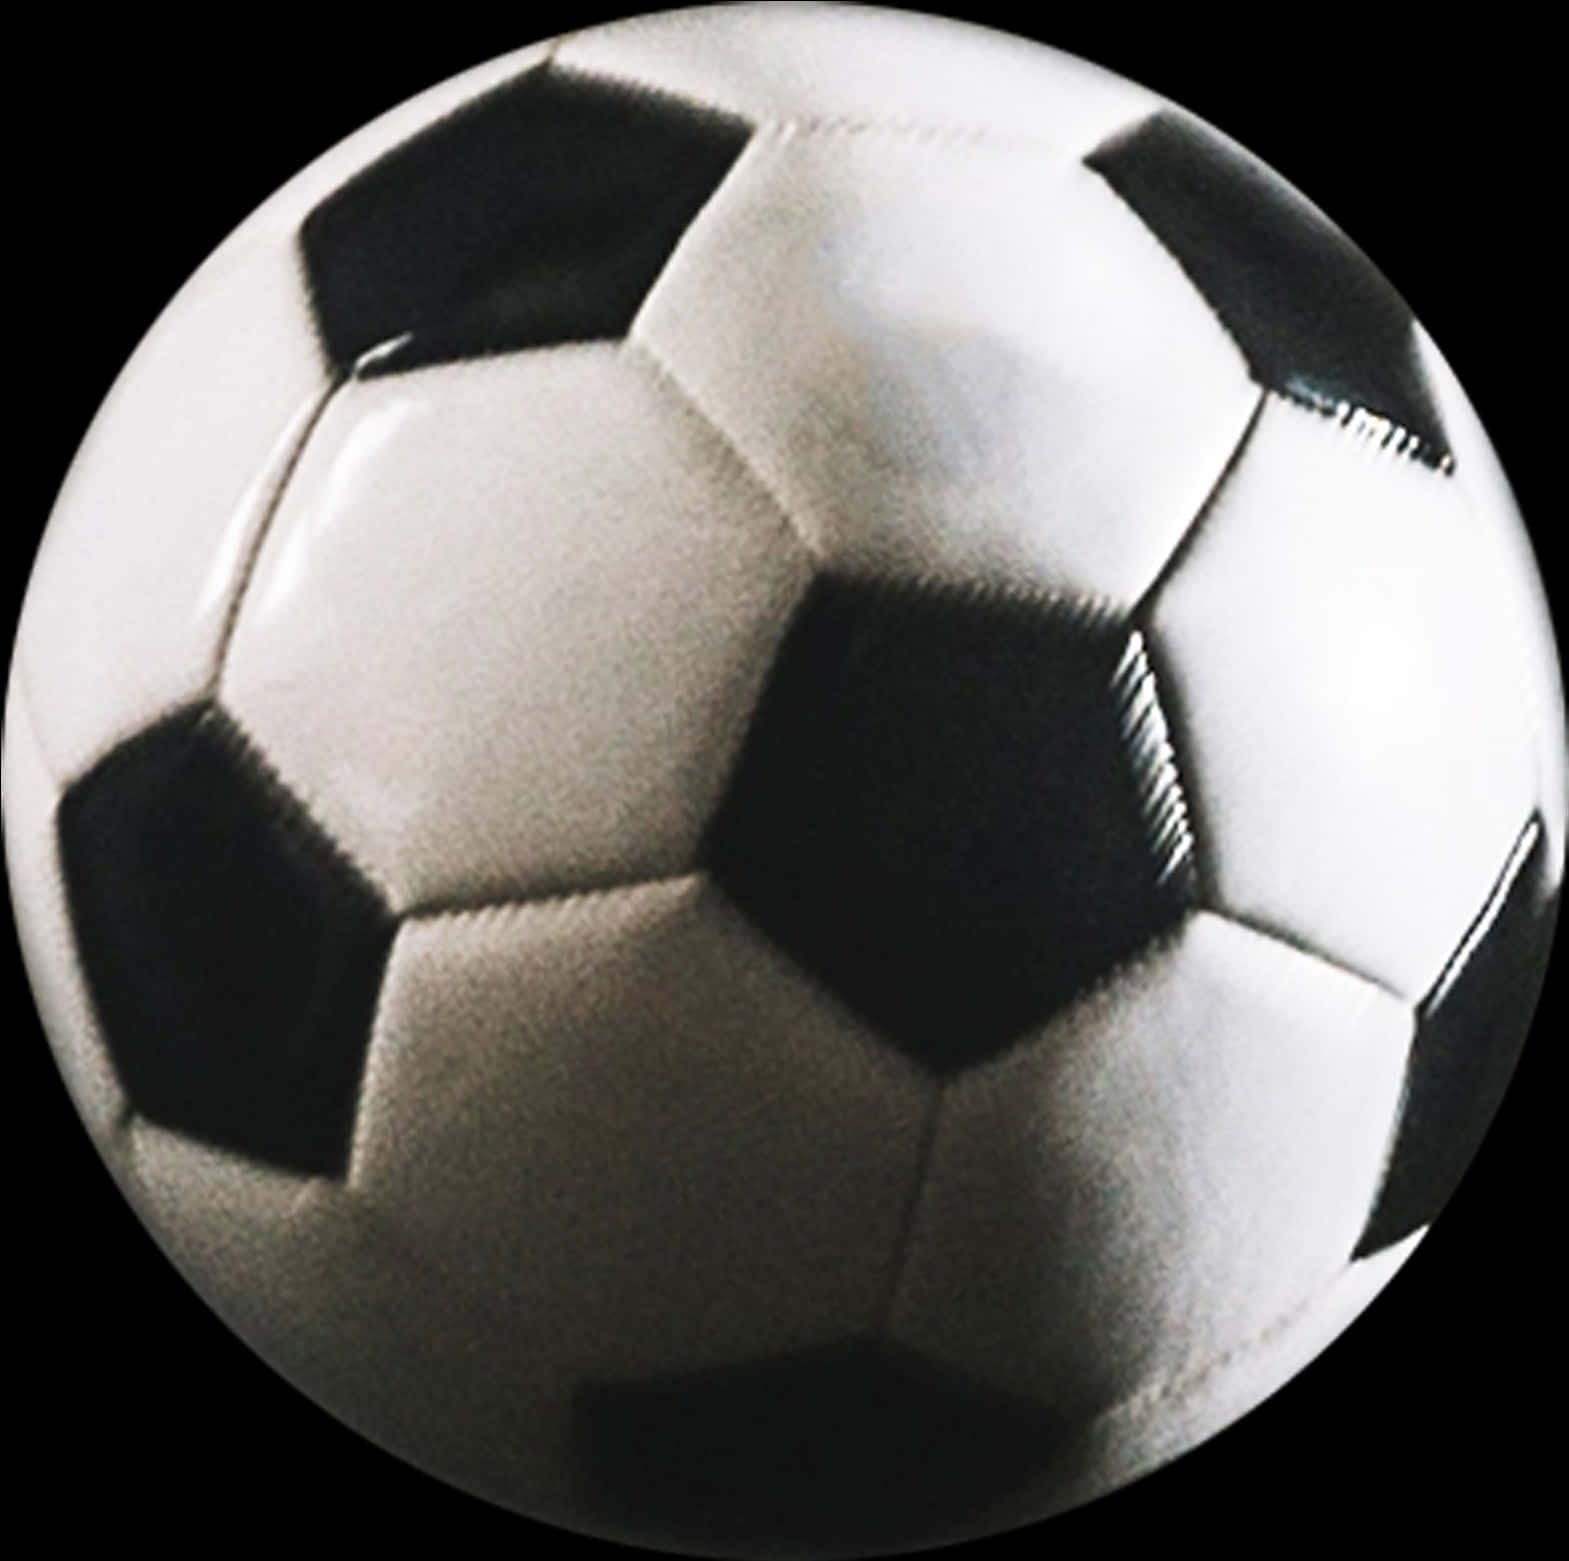 Classic Soccer Ball Image